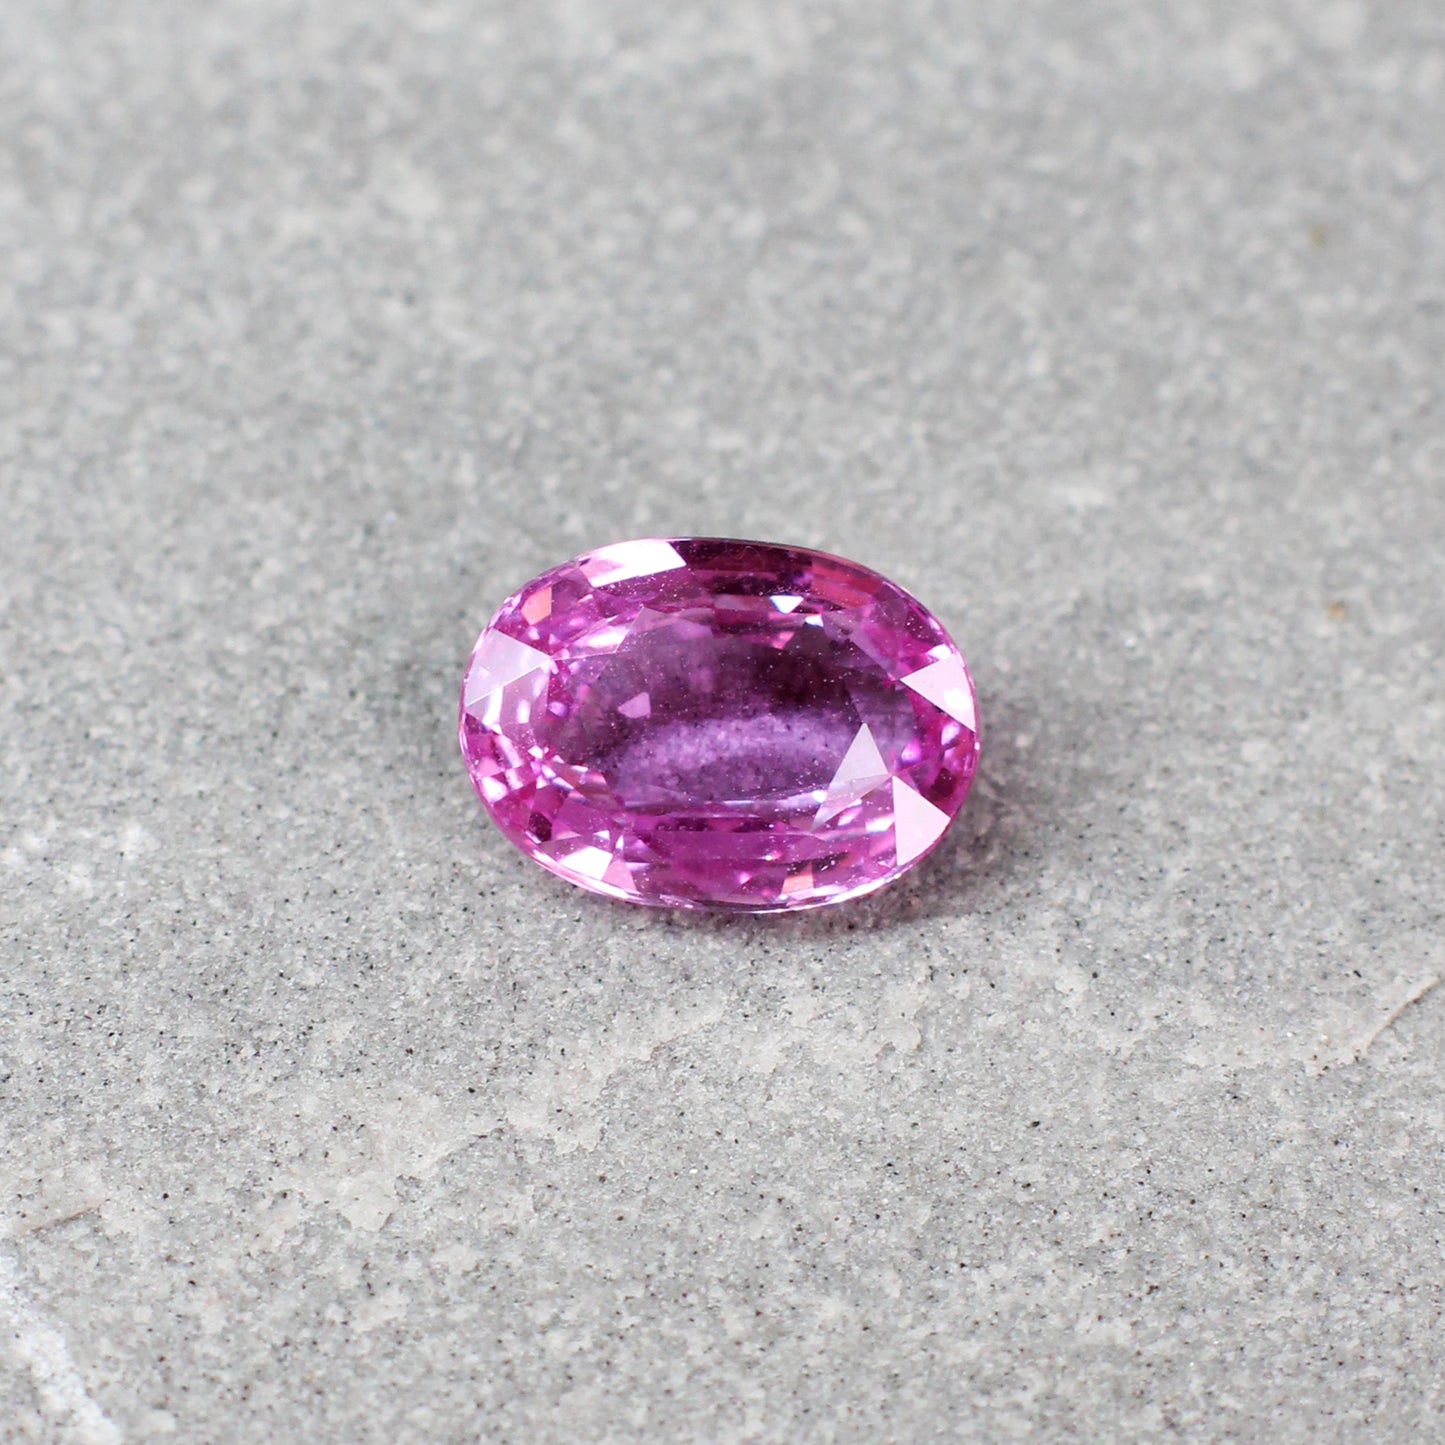 2.24ct Pink, Oval Sapphire, Heated, Madagascar - 9.06 x 6.47 x 3.84mm